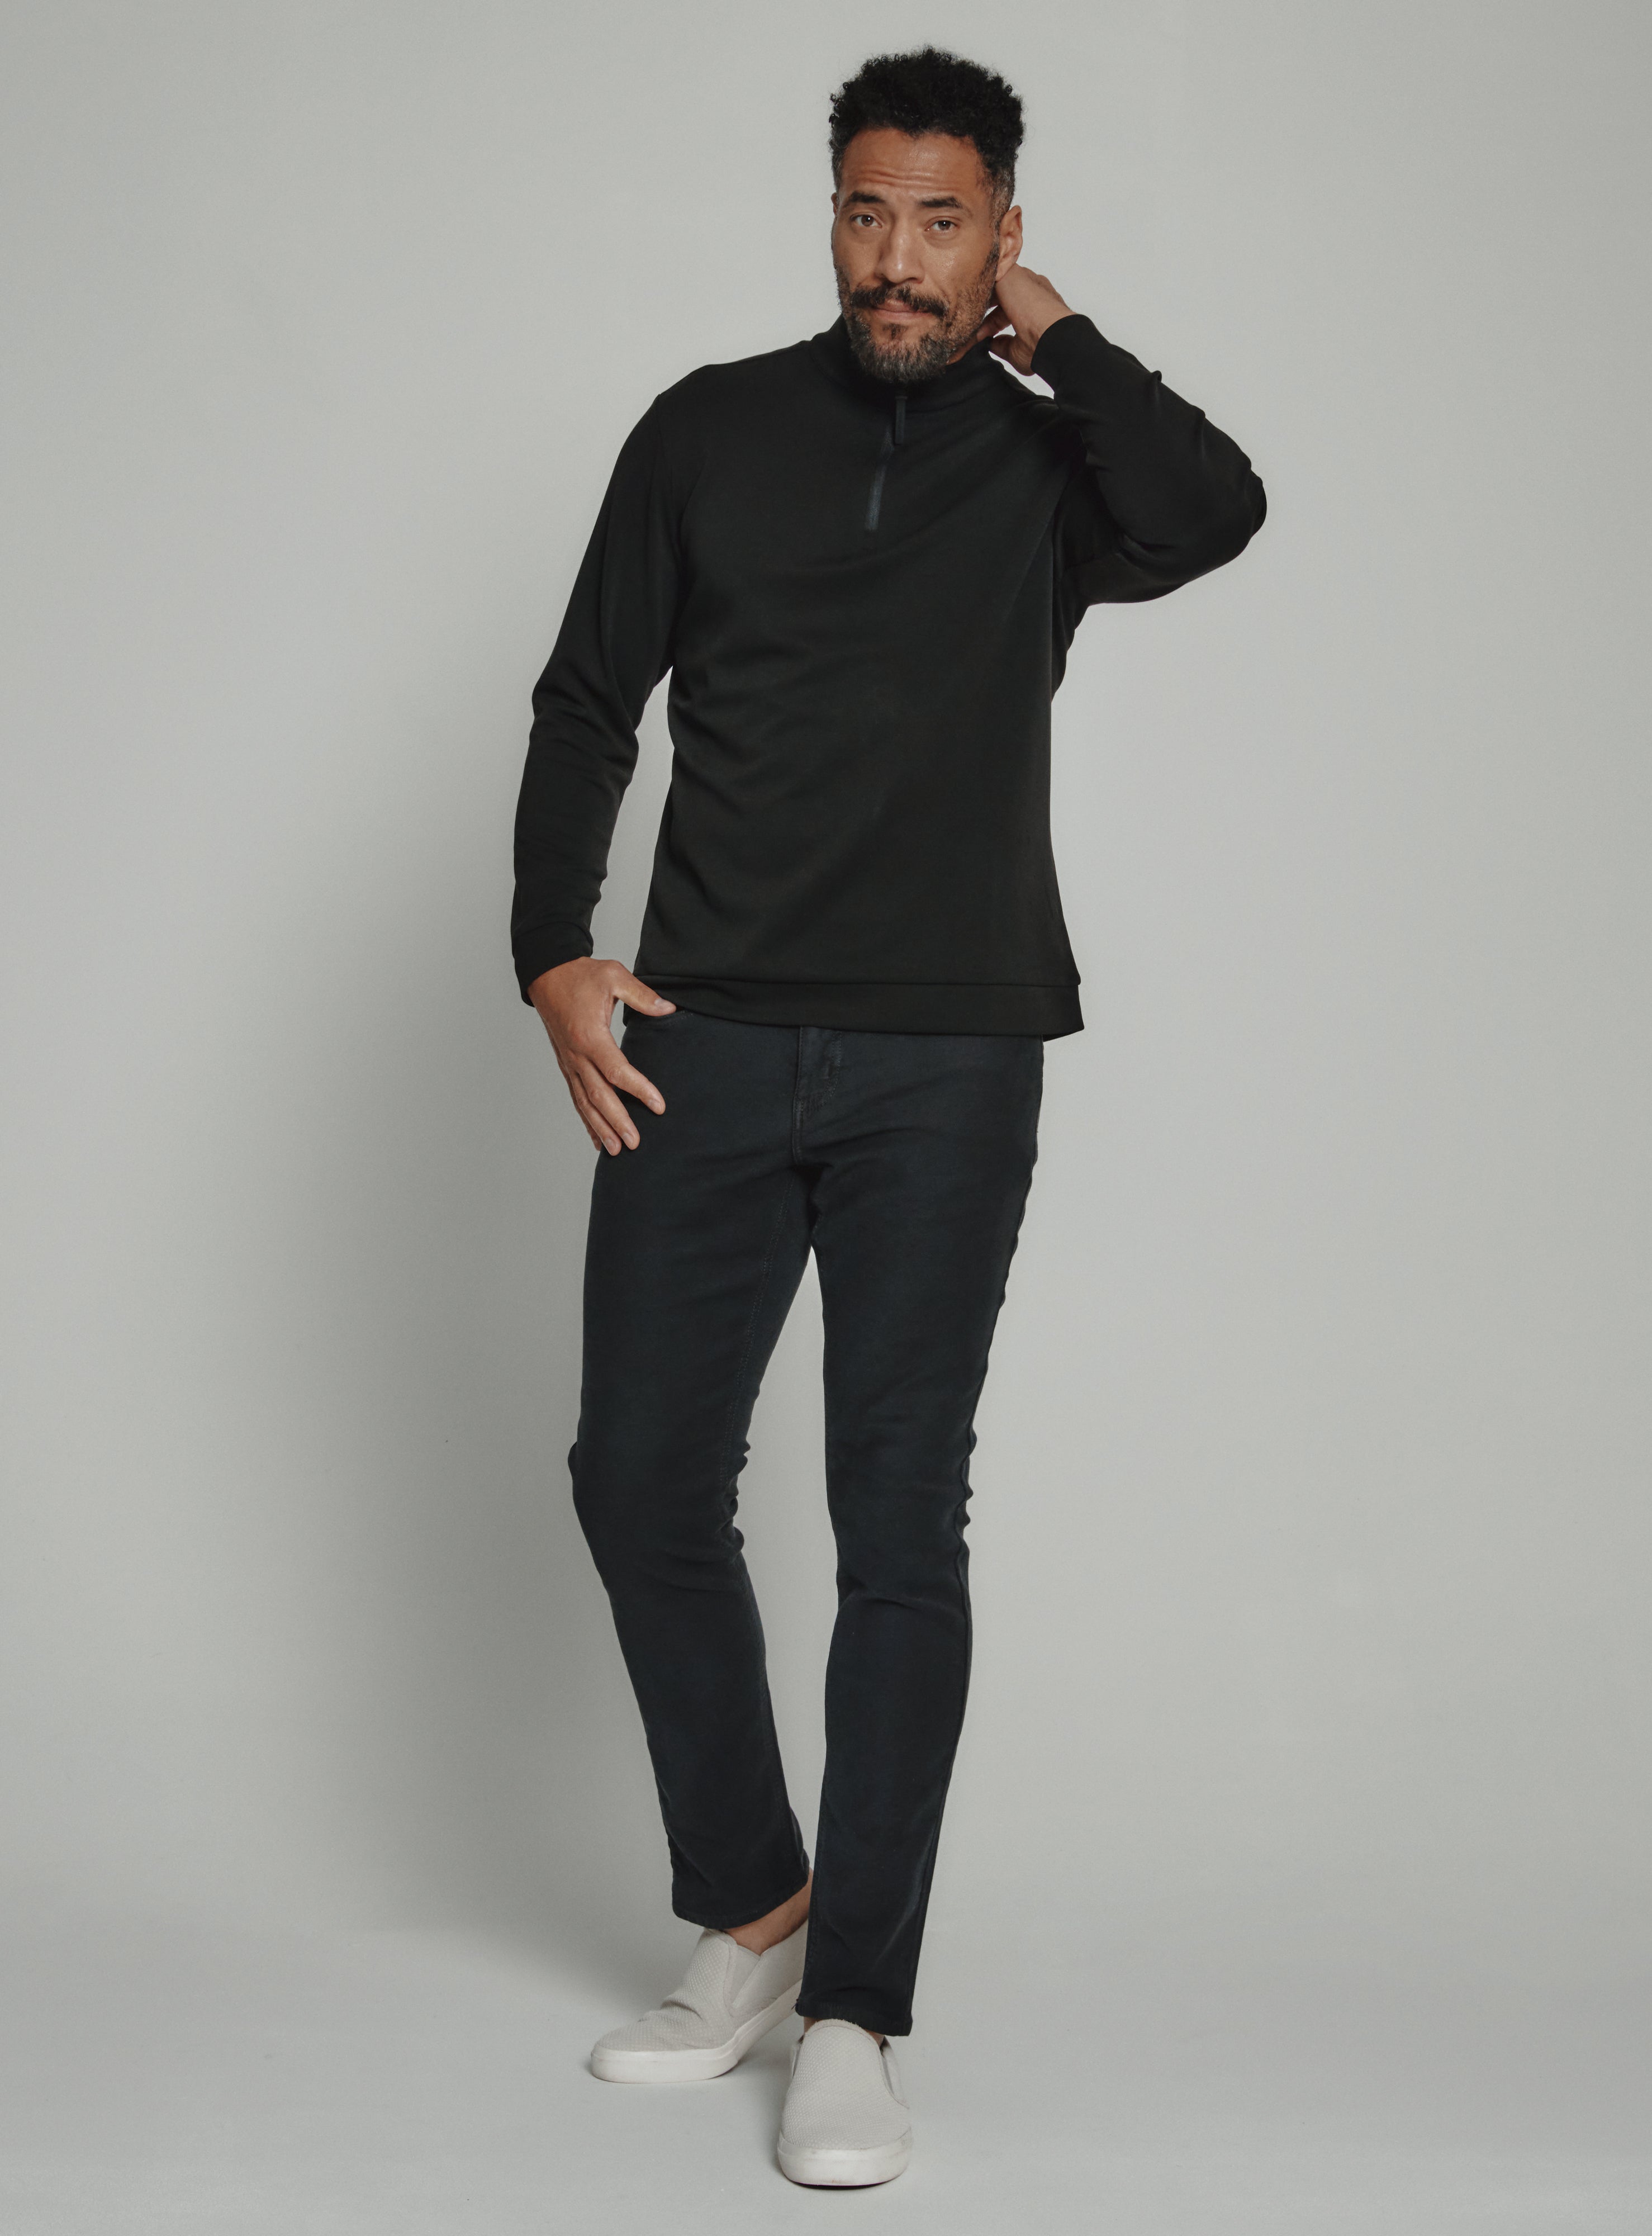 Rev 1/4 Zip Modal Sweater Black